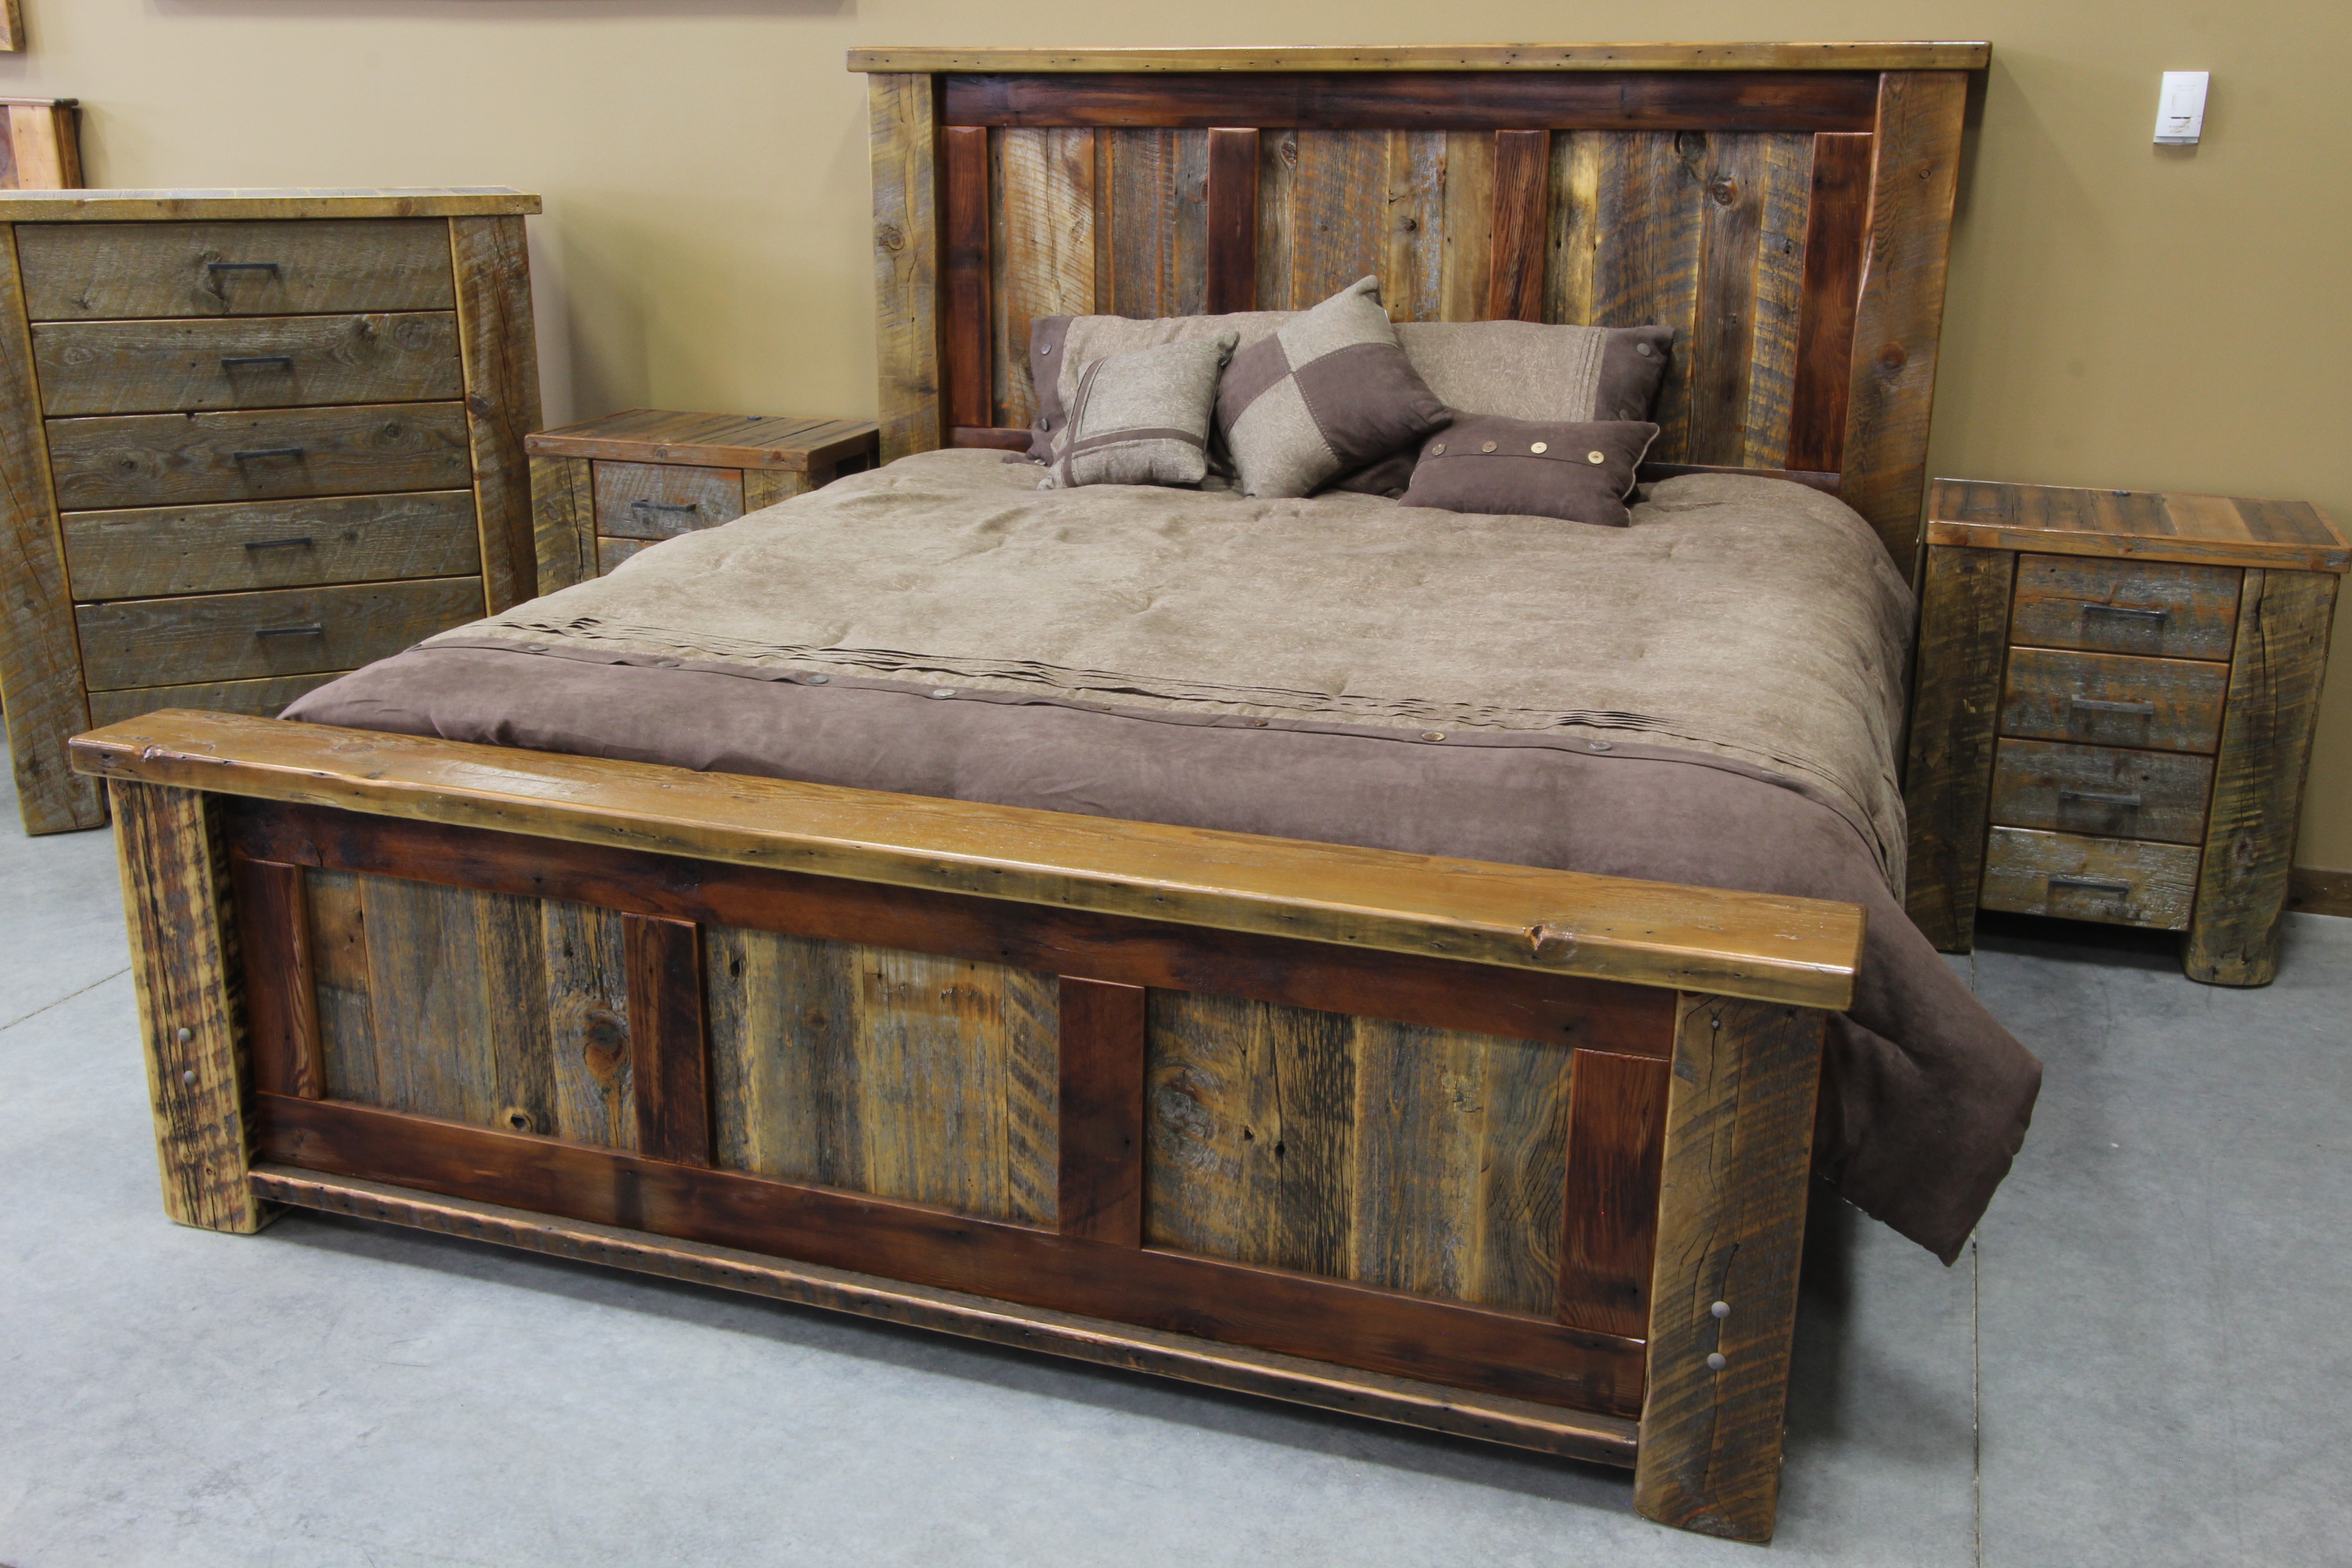 rustic barnwood bedroom furniture